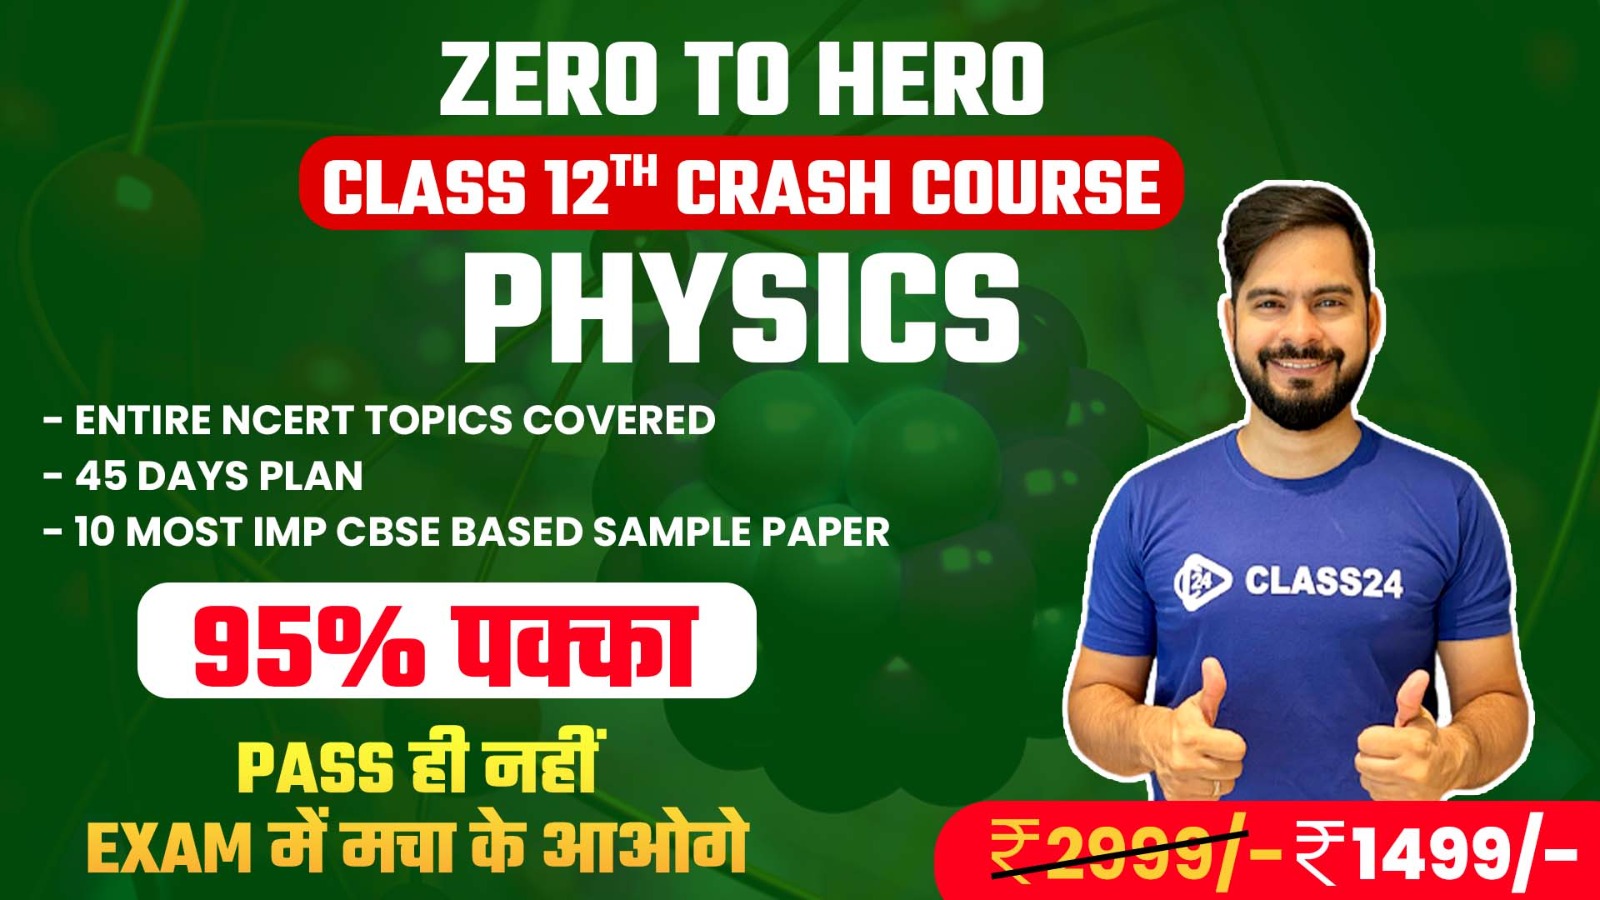 Zero to Hero Class 12 Physics Crash Course